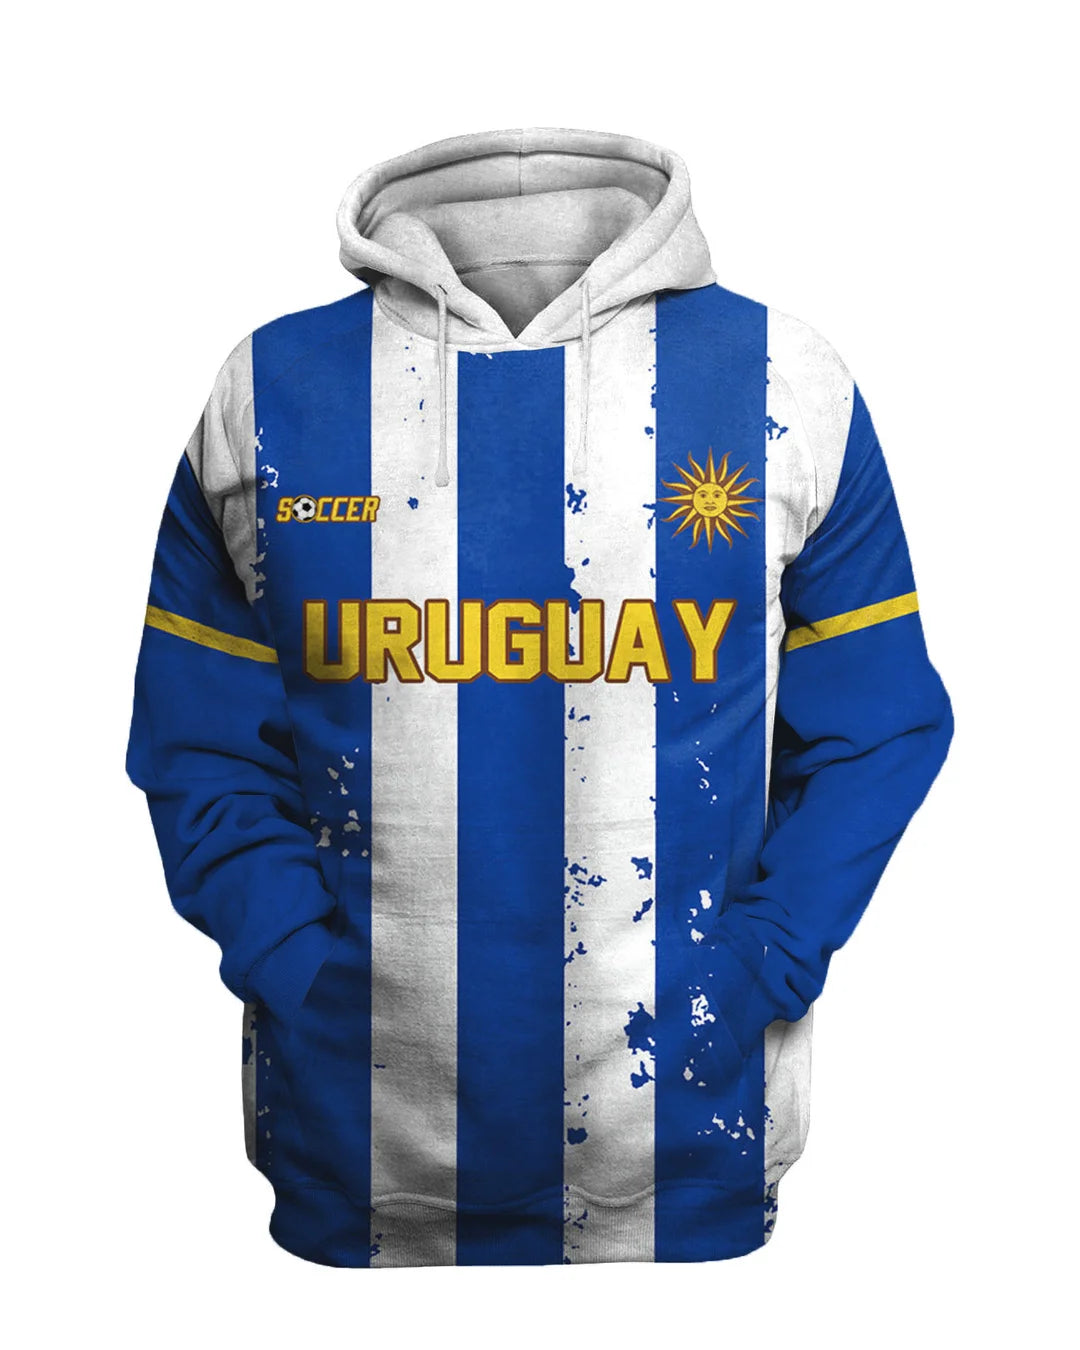 Asociación Uruguaya National Football Team Printed Sweatshirt Set